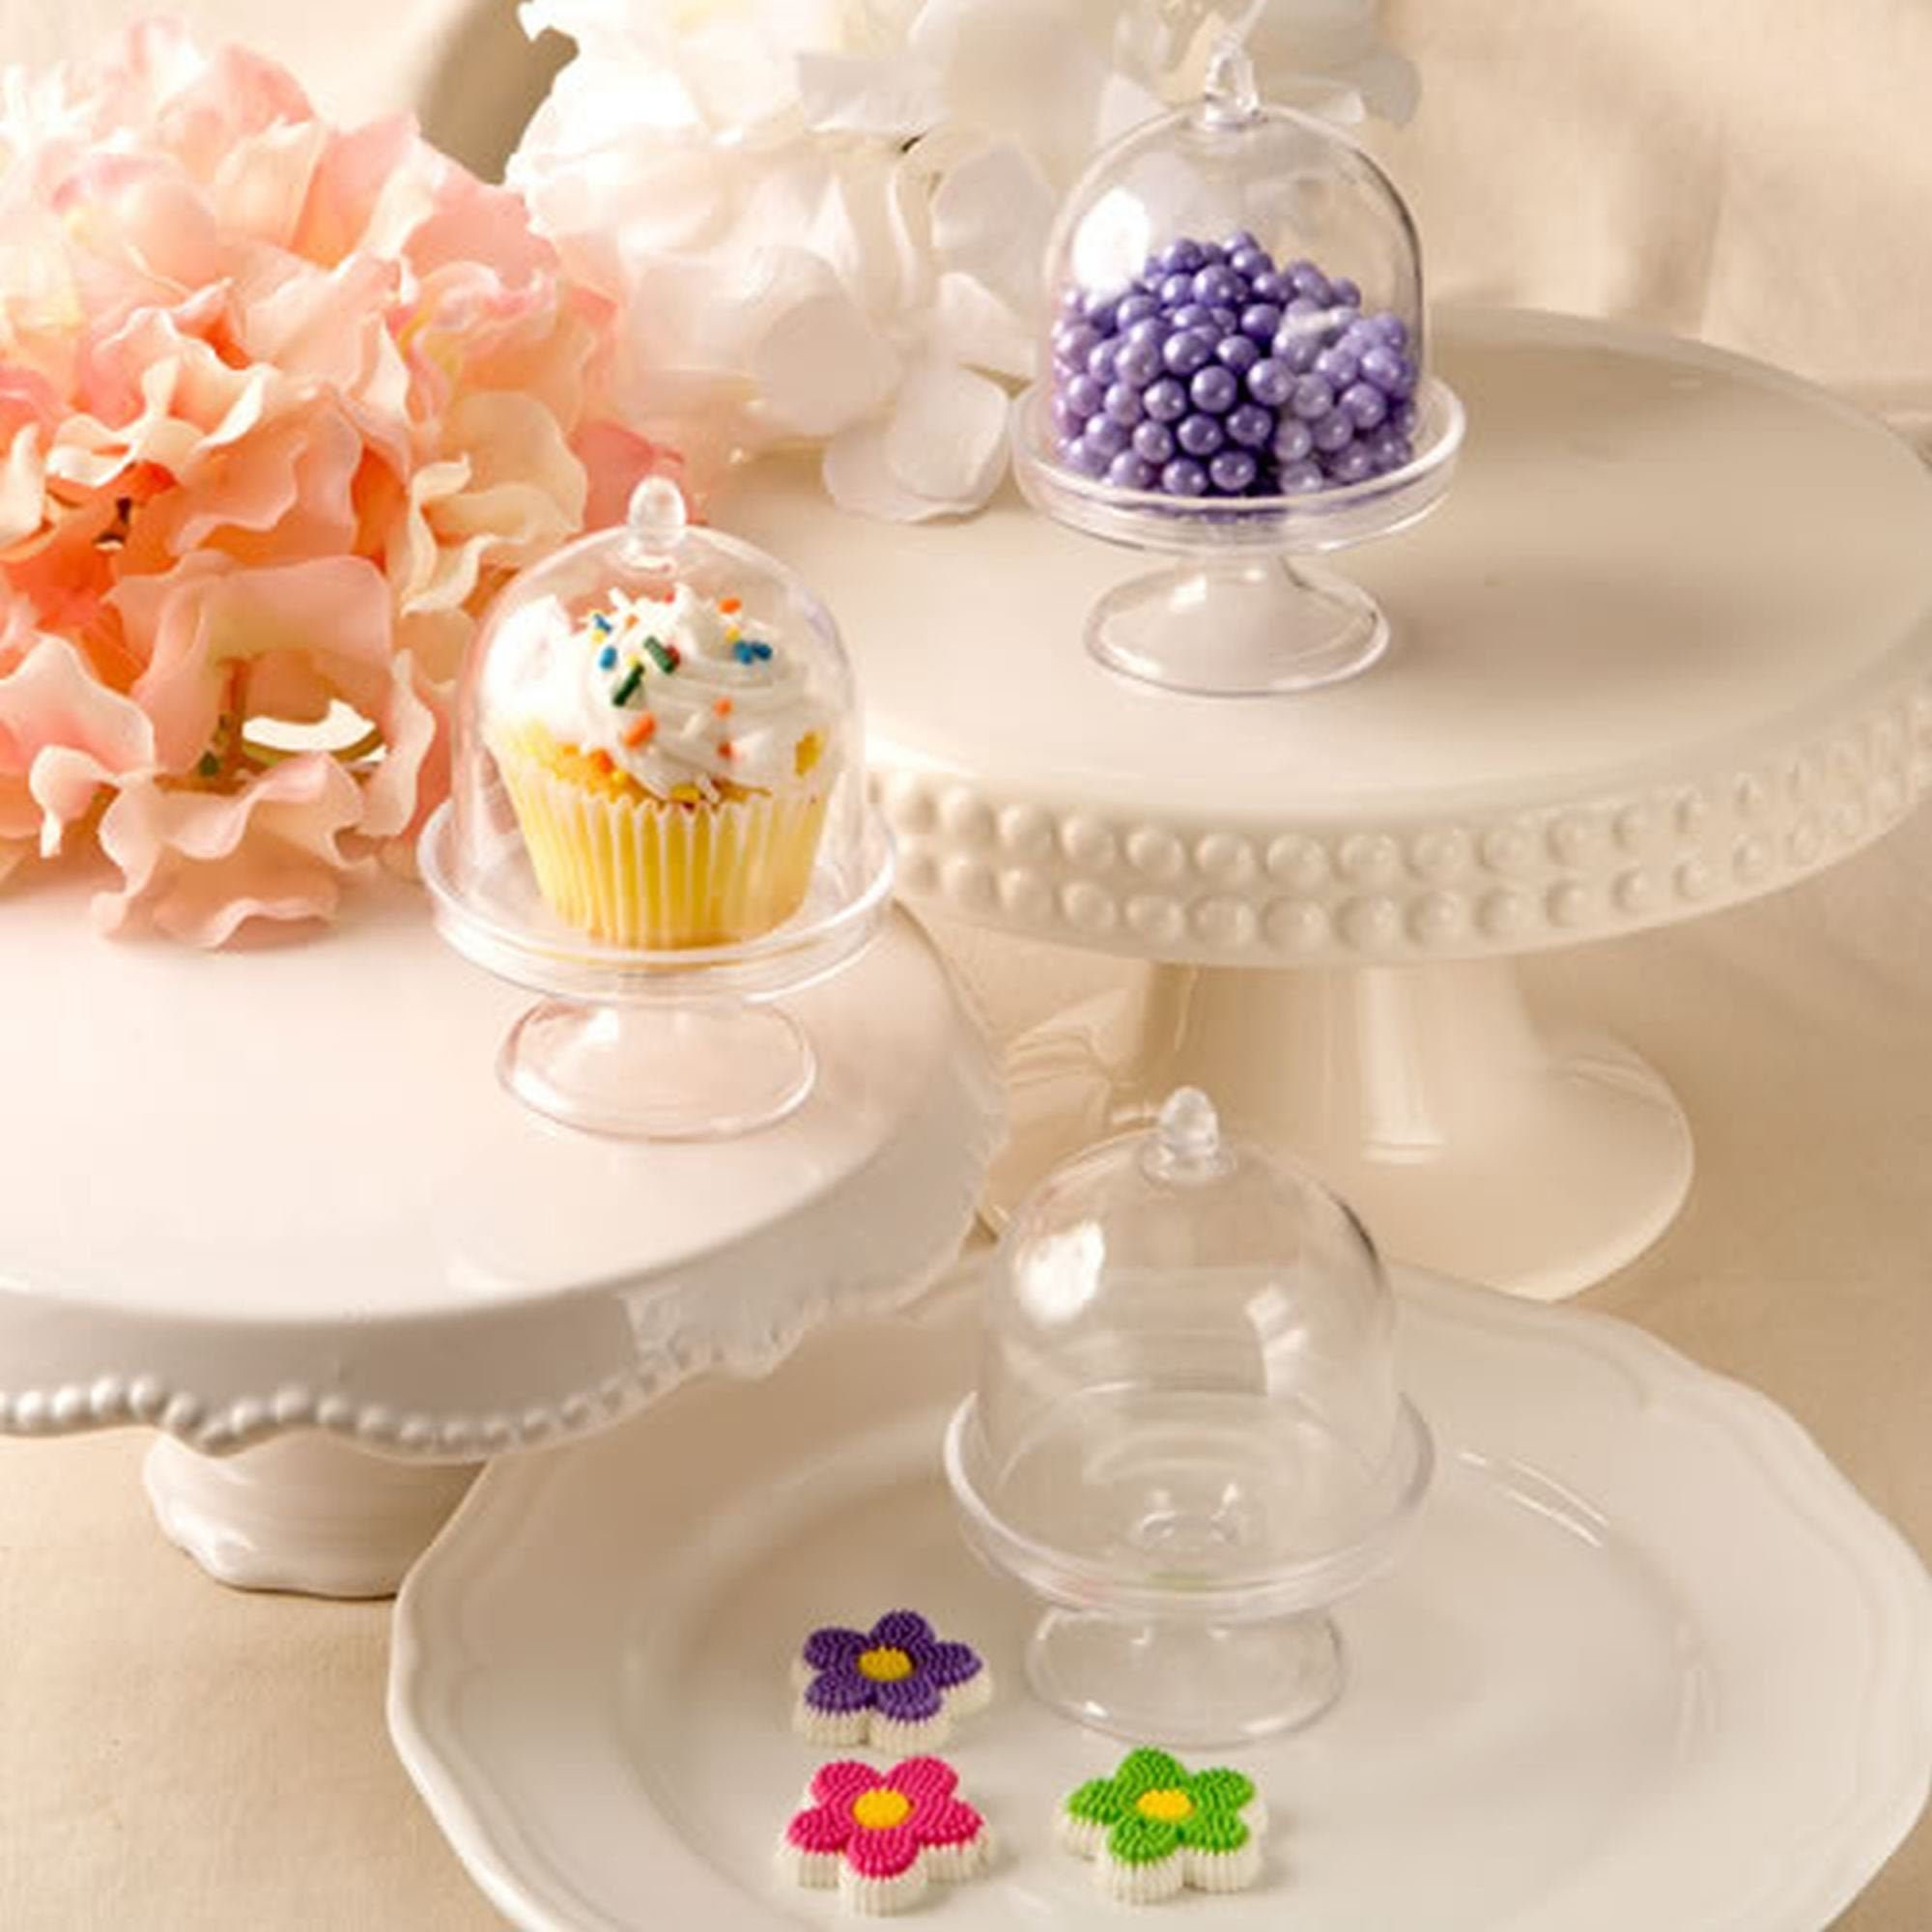 10X Mini Cake Stand Cupcake Box Plastic Candy Box Wedding Party newm Gifts S4R4 